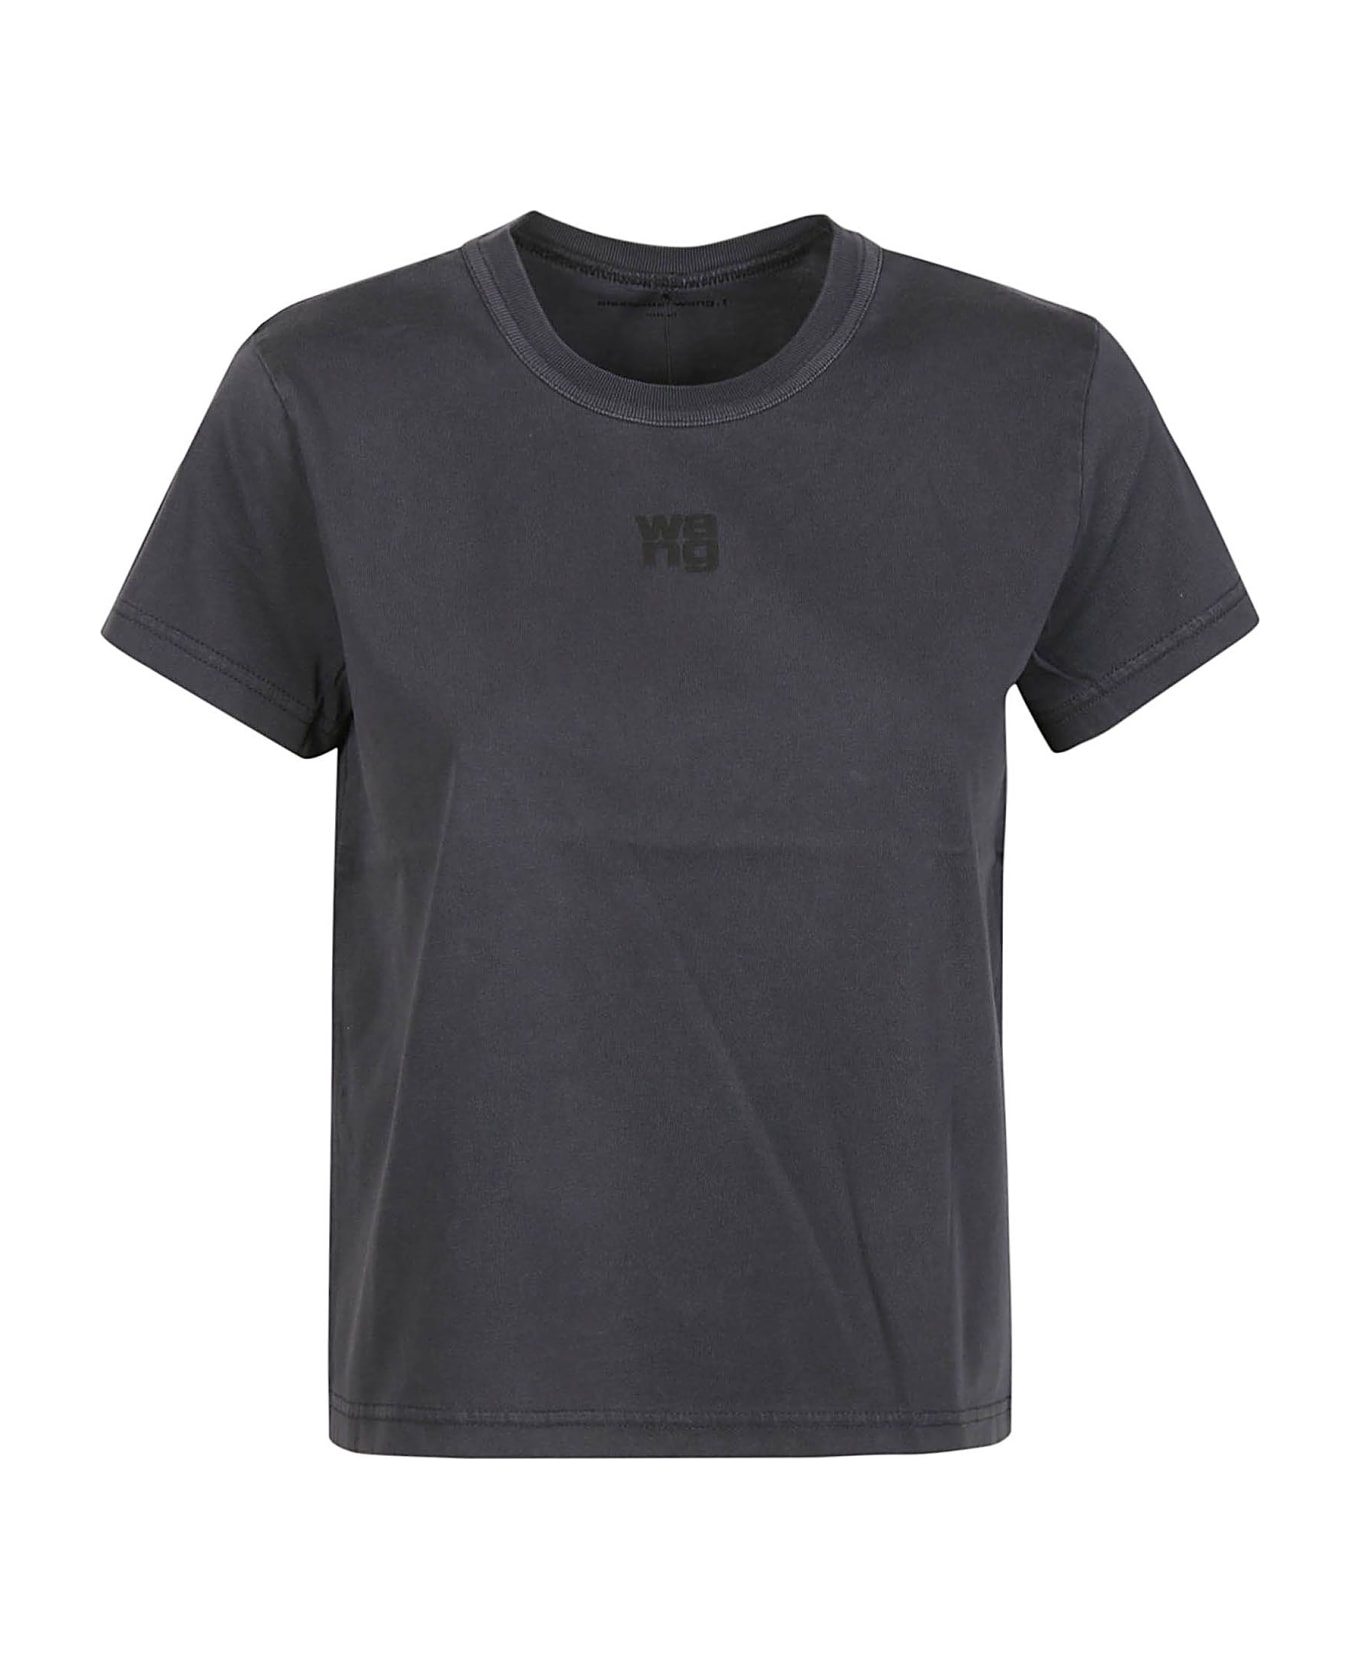 T by Alexander Wang Puff Logo Bound Neck Essential Shrunk T-shirt - A Soft Obsidian Tシャツ